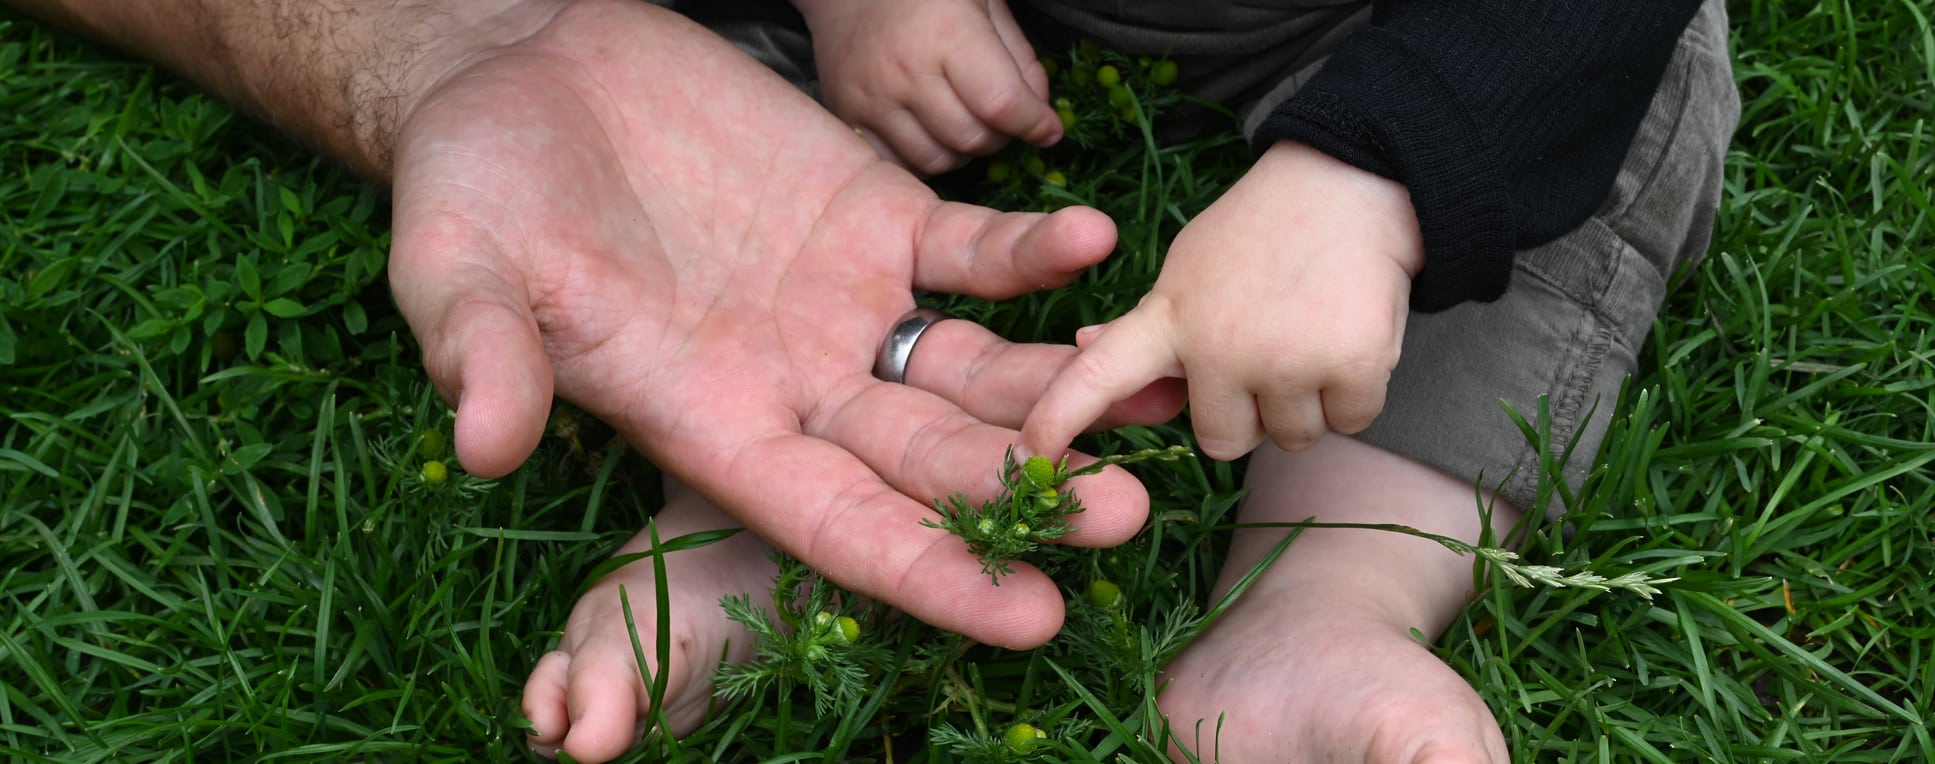 Barn peger på grøn vækst mellem fingrene på en voksenhånd